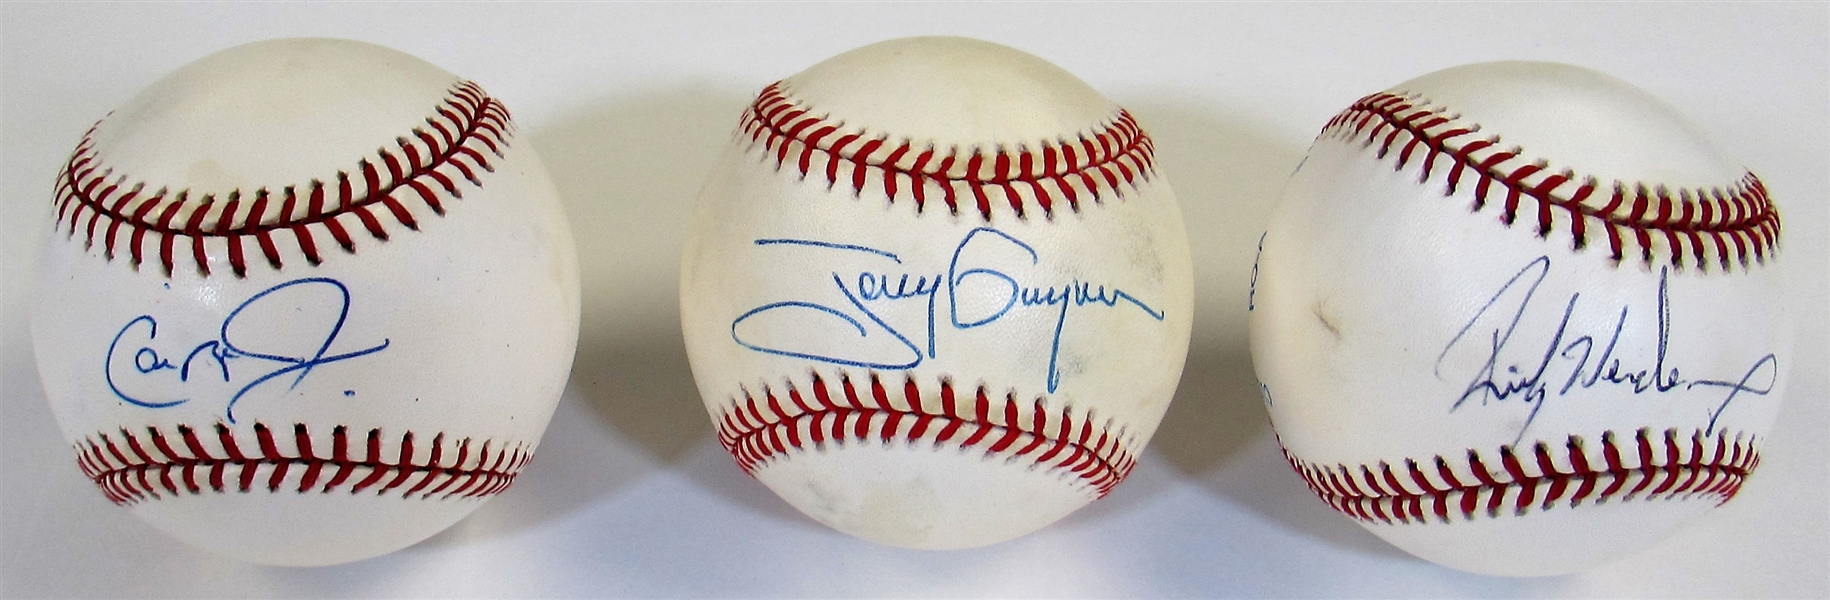 Tony Gwynn - Cal Ripken - Ricky Henderson Signed Baseballs